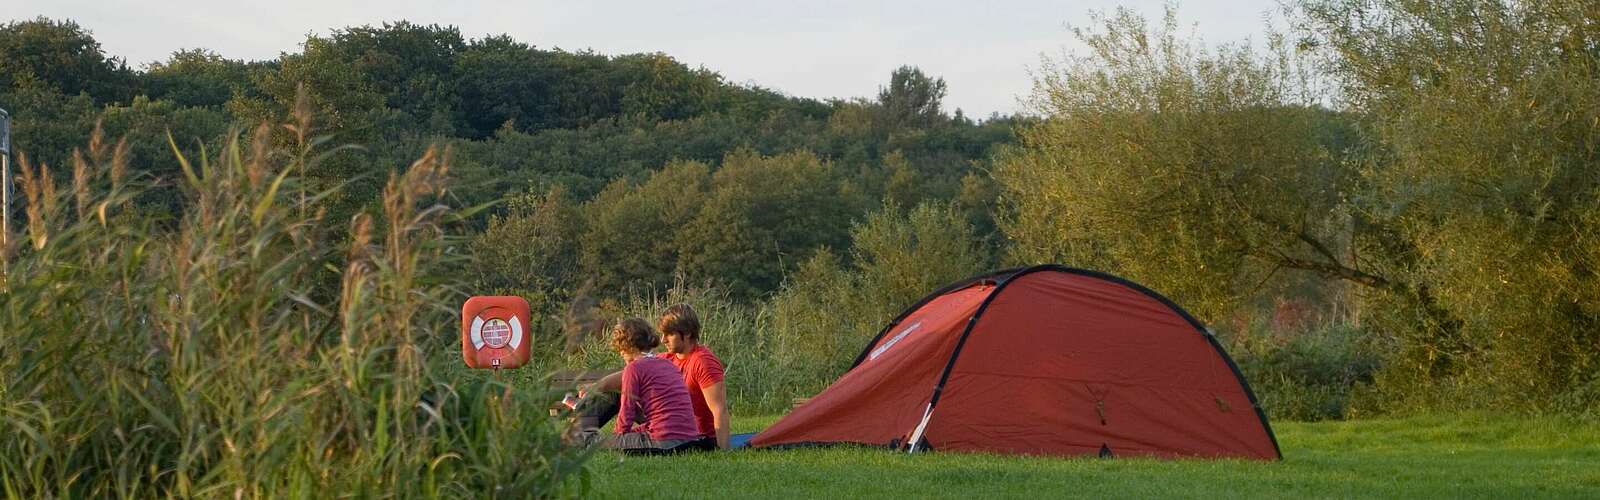 Camping in der Natur,
        
    

        Foto: TMB-Fotoarchiv/Wolfgang Ehn